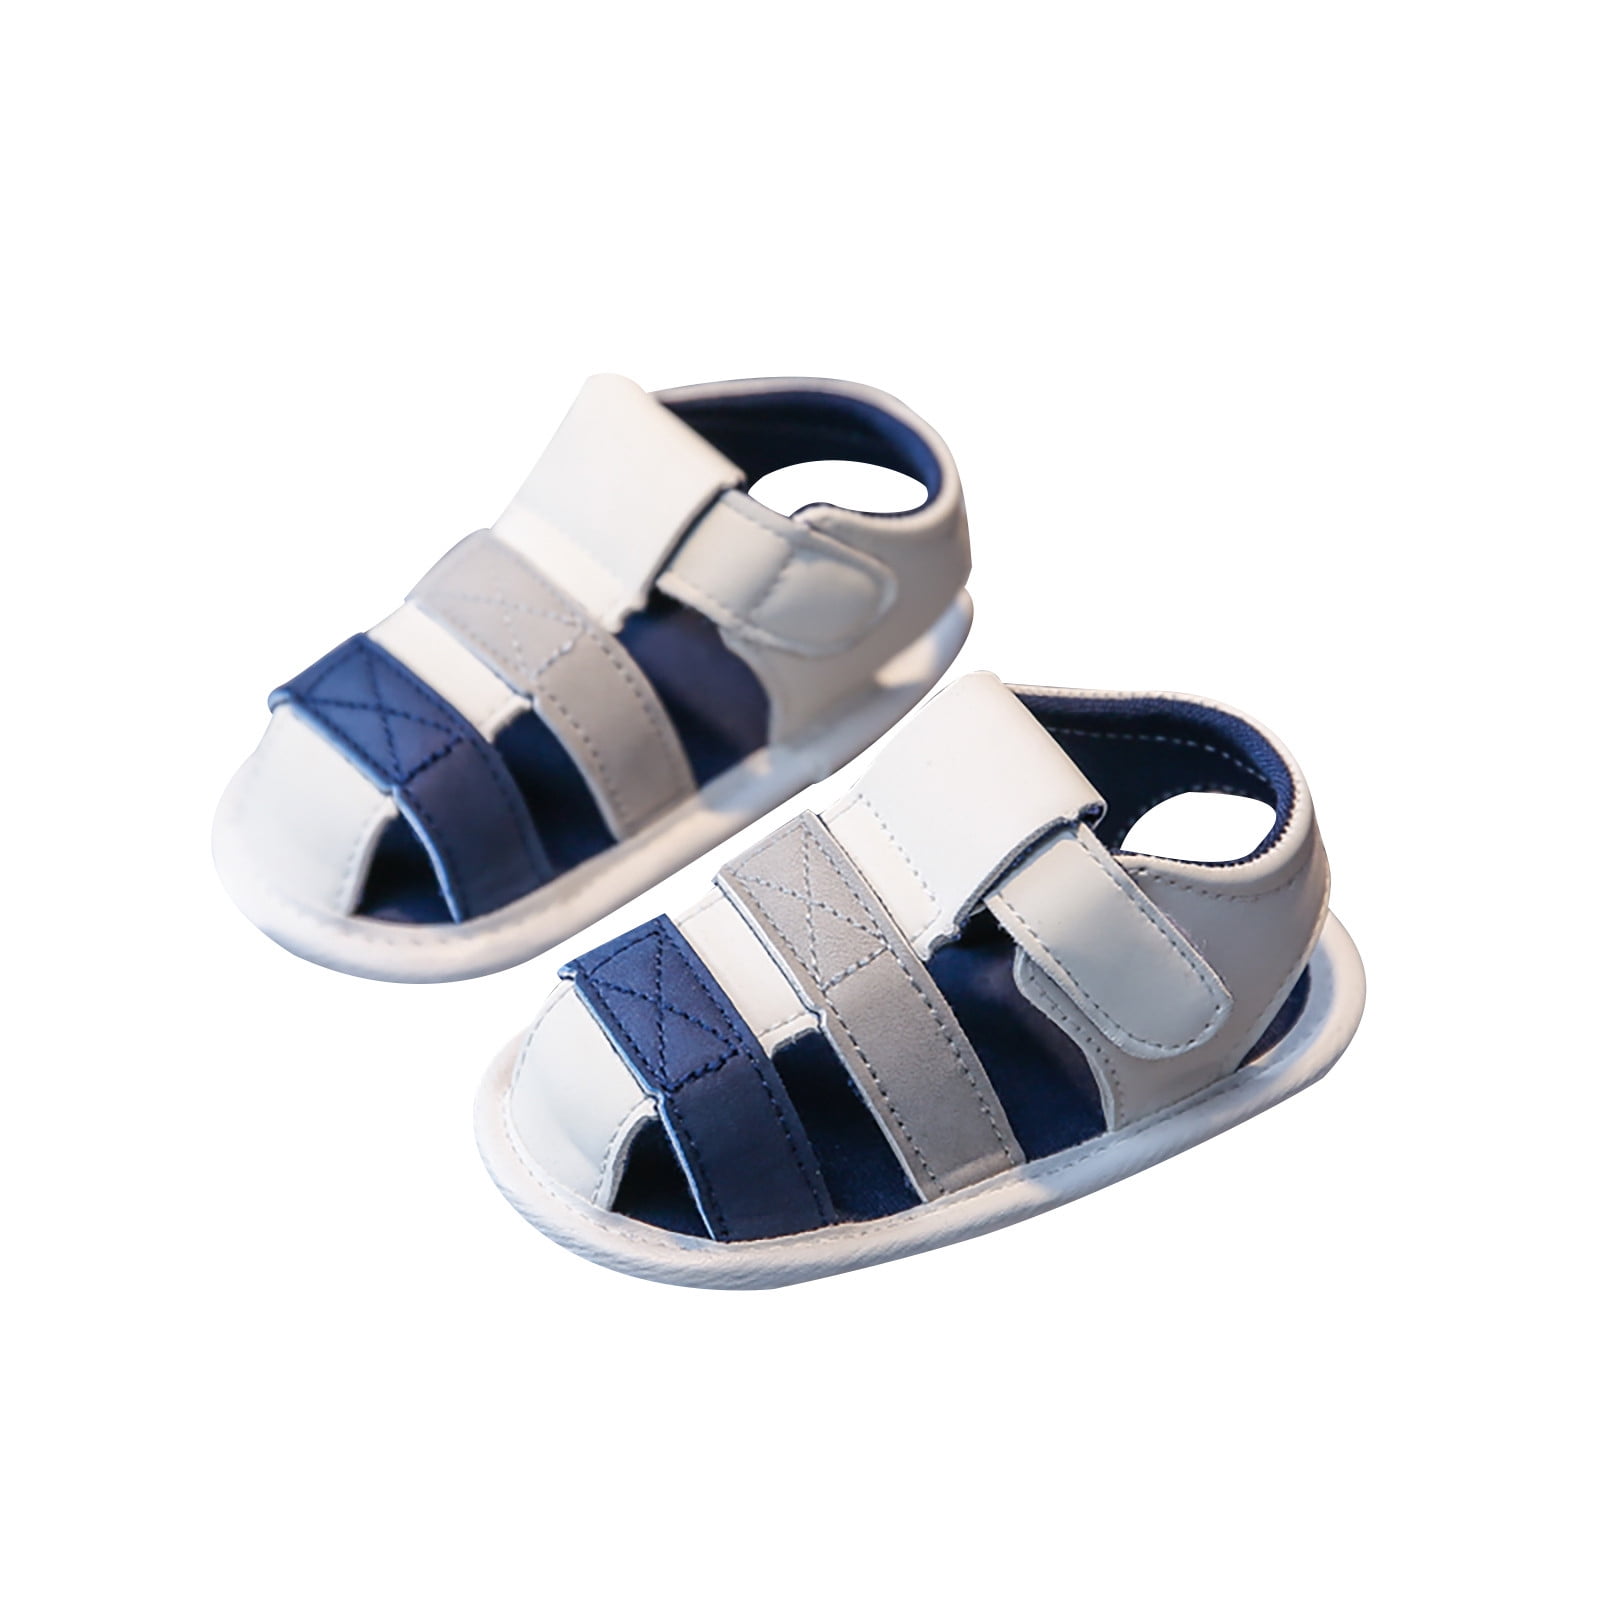 Hot Newborn Baby Boy Crib Shoes Toddler Animal Pattern Summer Sandals Size 1 2 3 